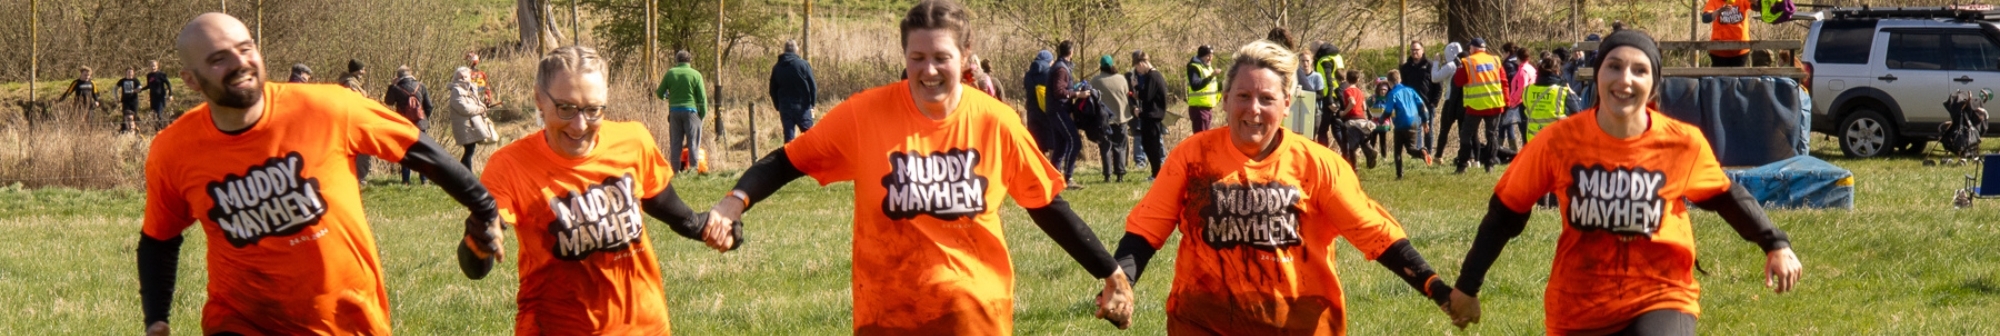 group-hold-hands-while-running-at-muddy-mayhem